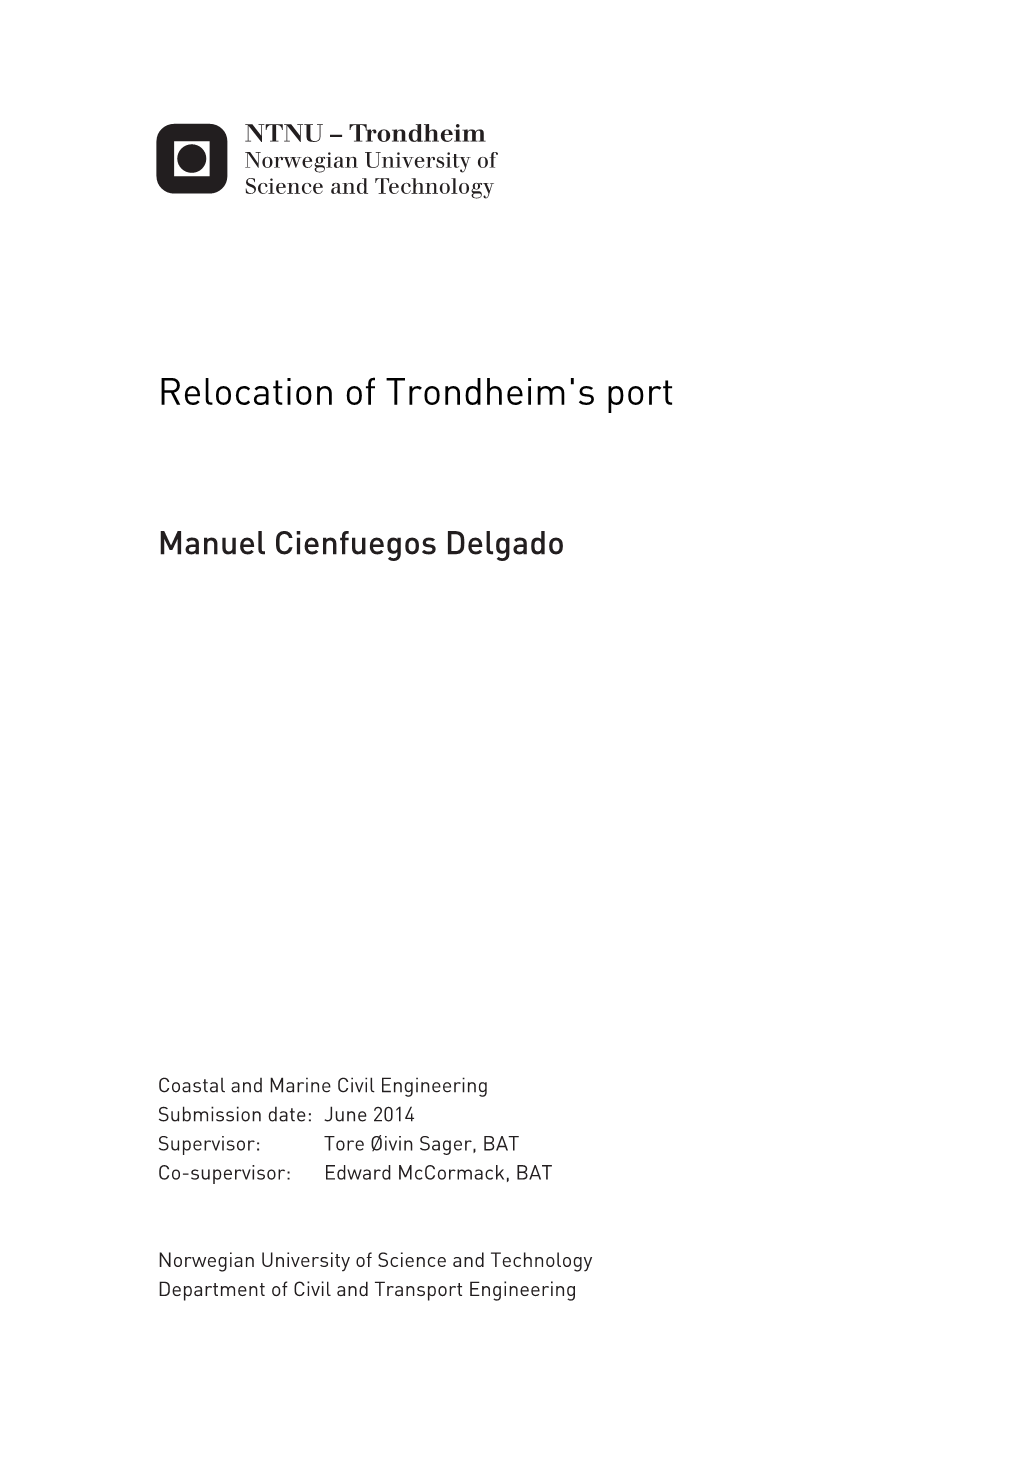 Relocation of Trondheim's Port